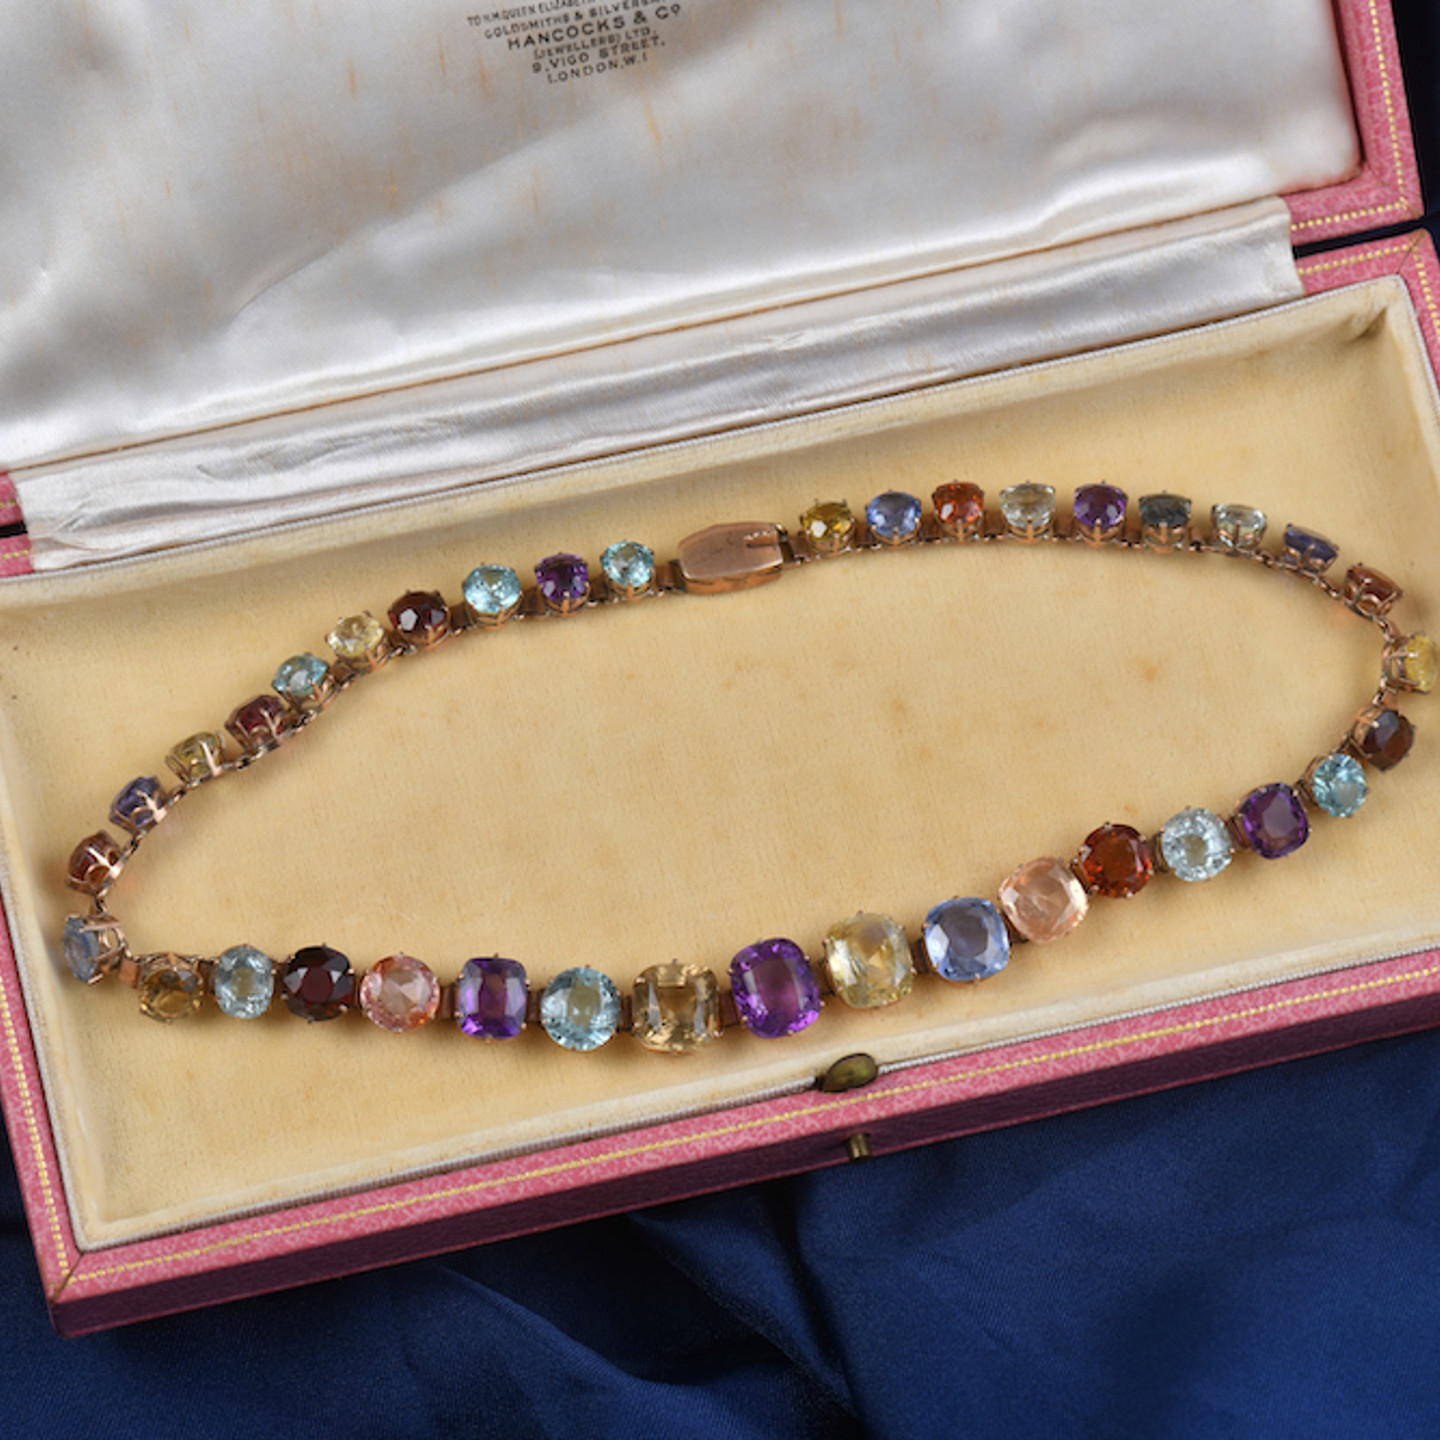 A C1900 Rose Gold Necklace Set With Twelve Natural Ceylon Sapphires, Garnet, Citrine, Amethyst, Zircons And Quartz. Sold For £9500